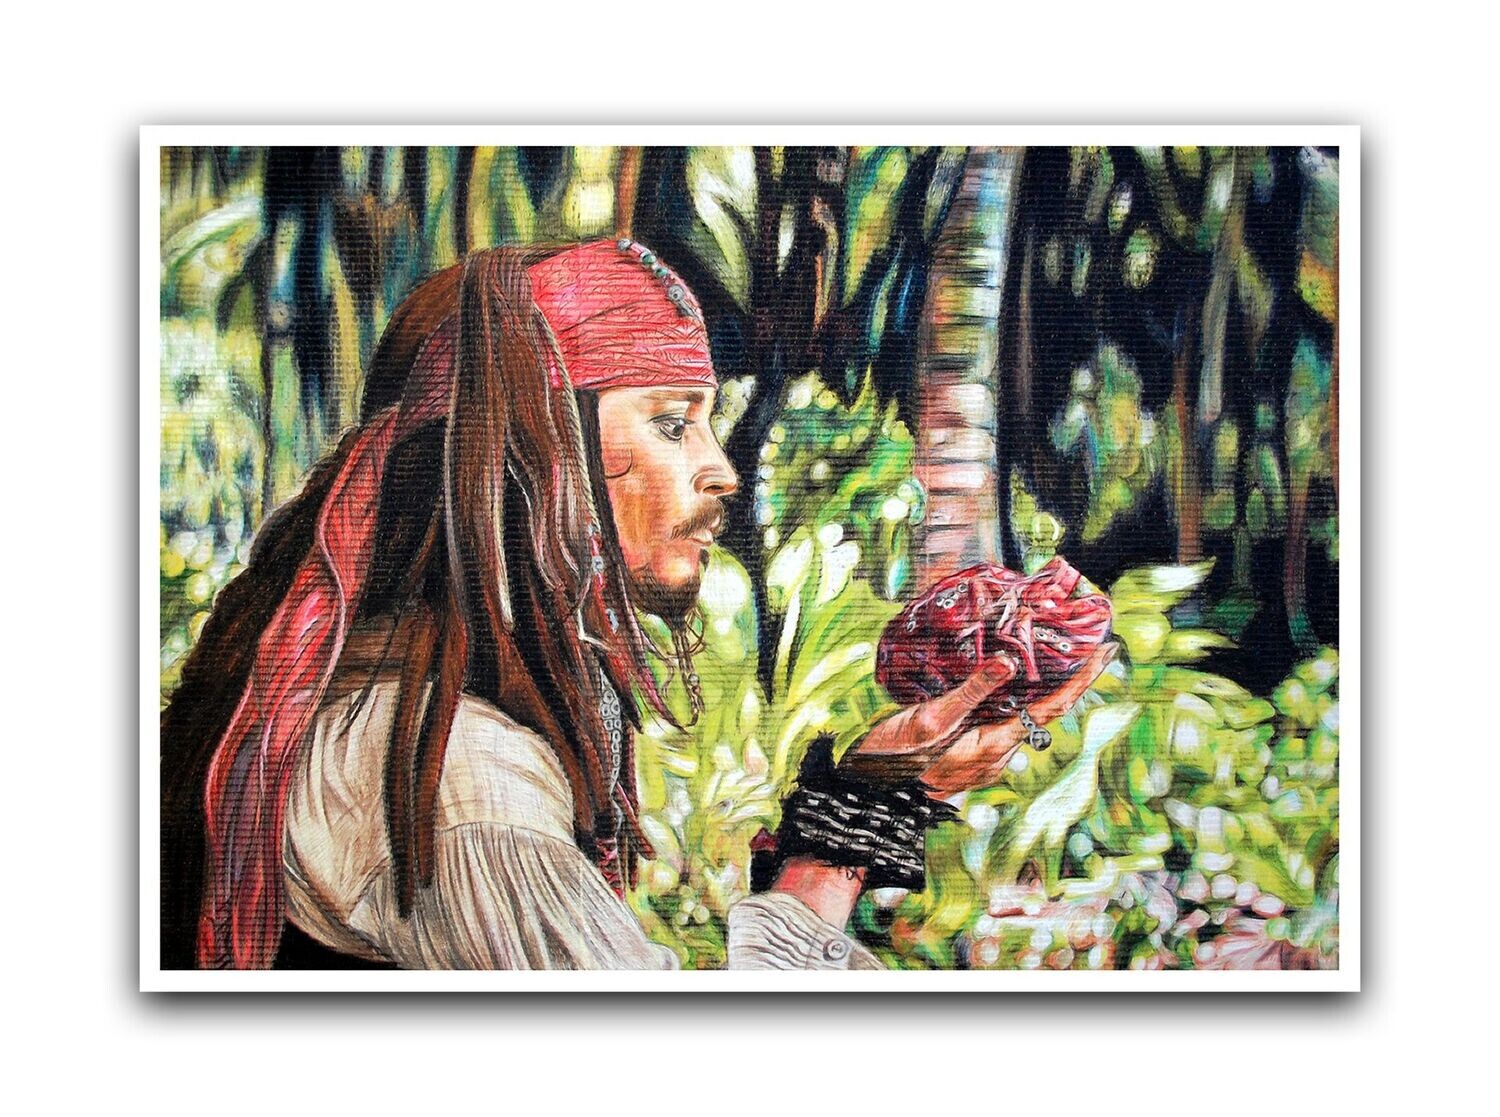 Captain Jack Sparrow - Limitierte Künstlerpostkarte auf Hahnemühle Photo Rag® Duo Papier